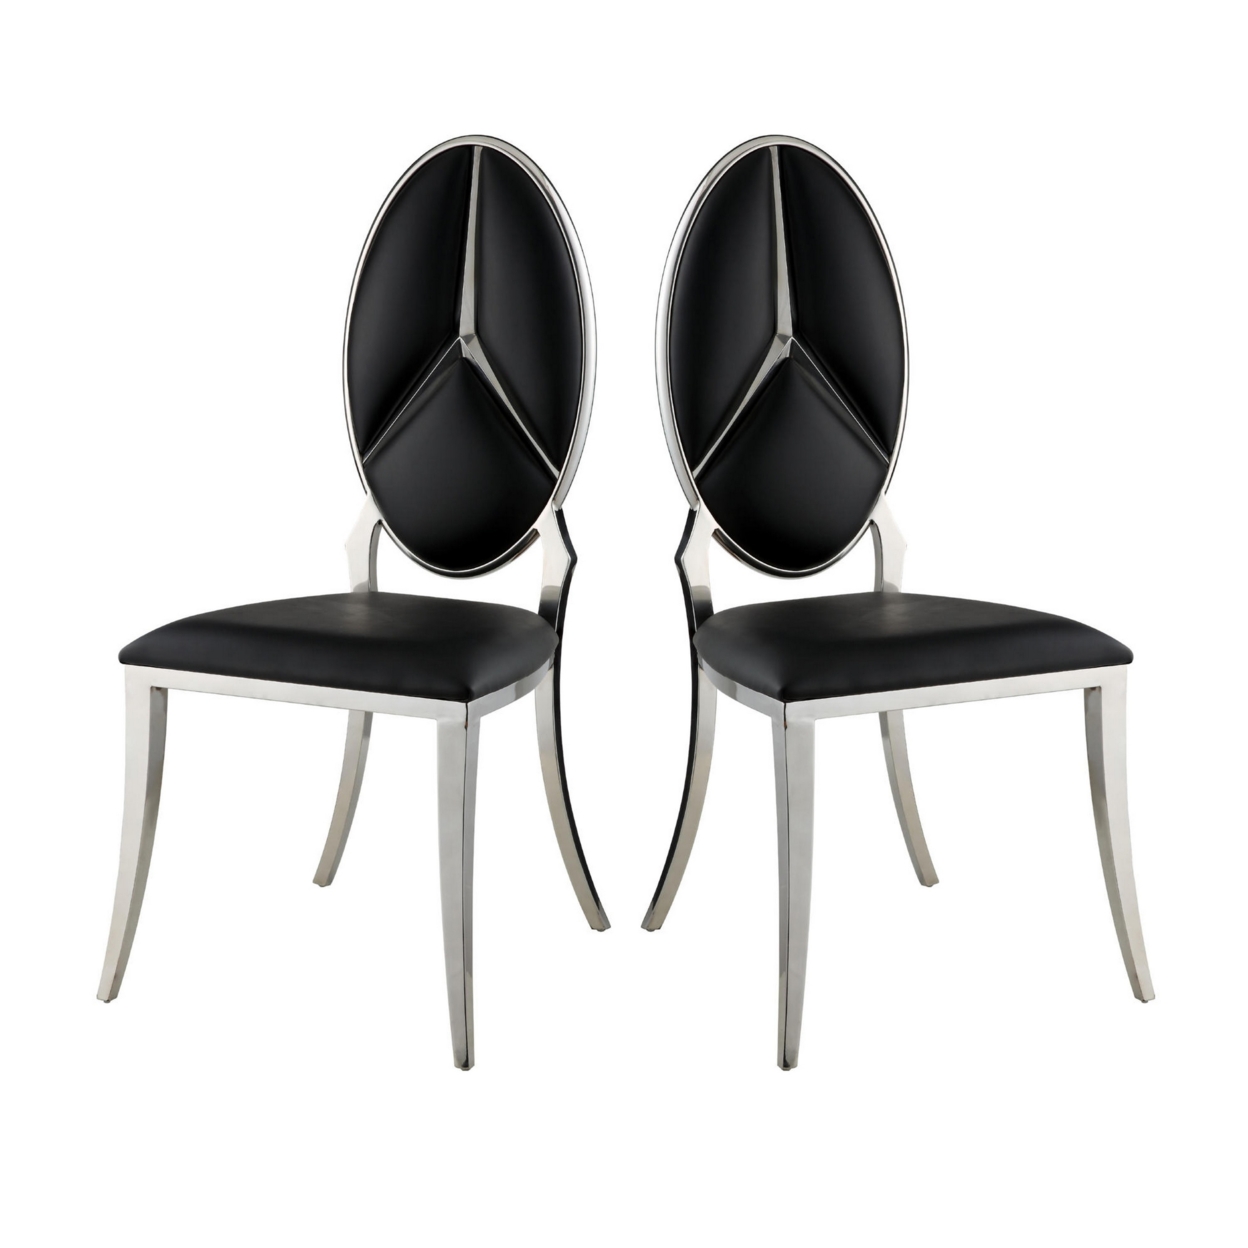 Kuri 20 Inch Modern Dining Chair, Vegan Leather, Set Of 2, Black, Chrome- Saltoro Sherpi